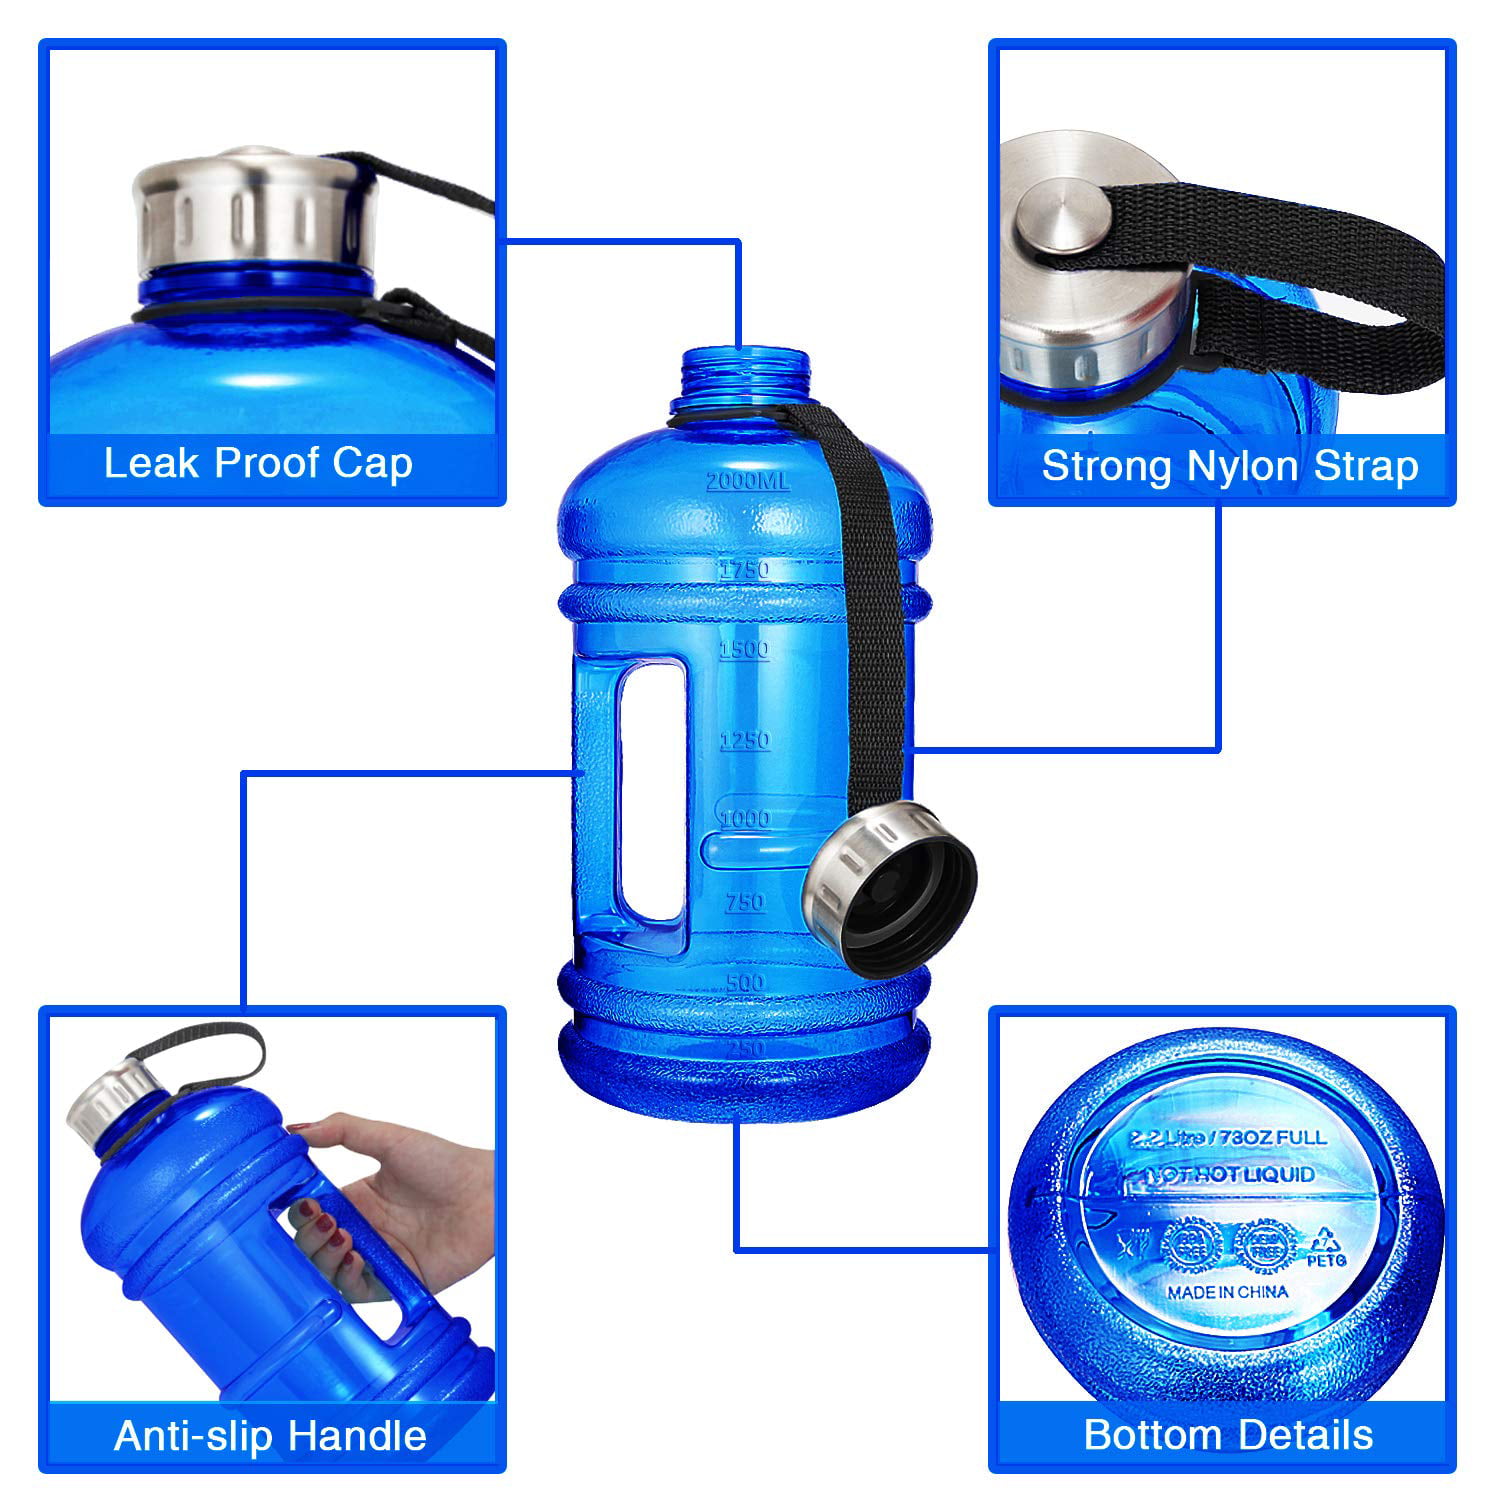 Big Giant Size BPA Free Gym Water Bottle Large Capacity 73 oz Buy Now